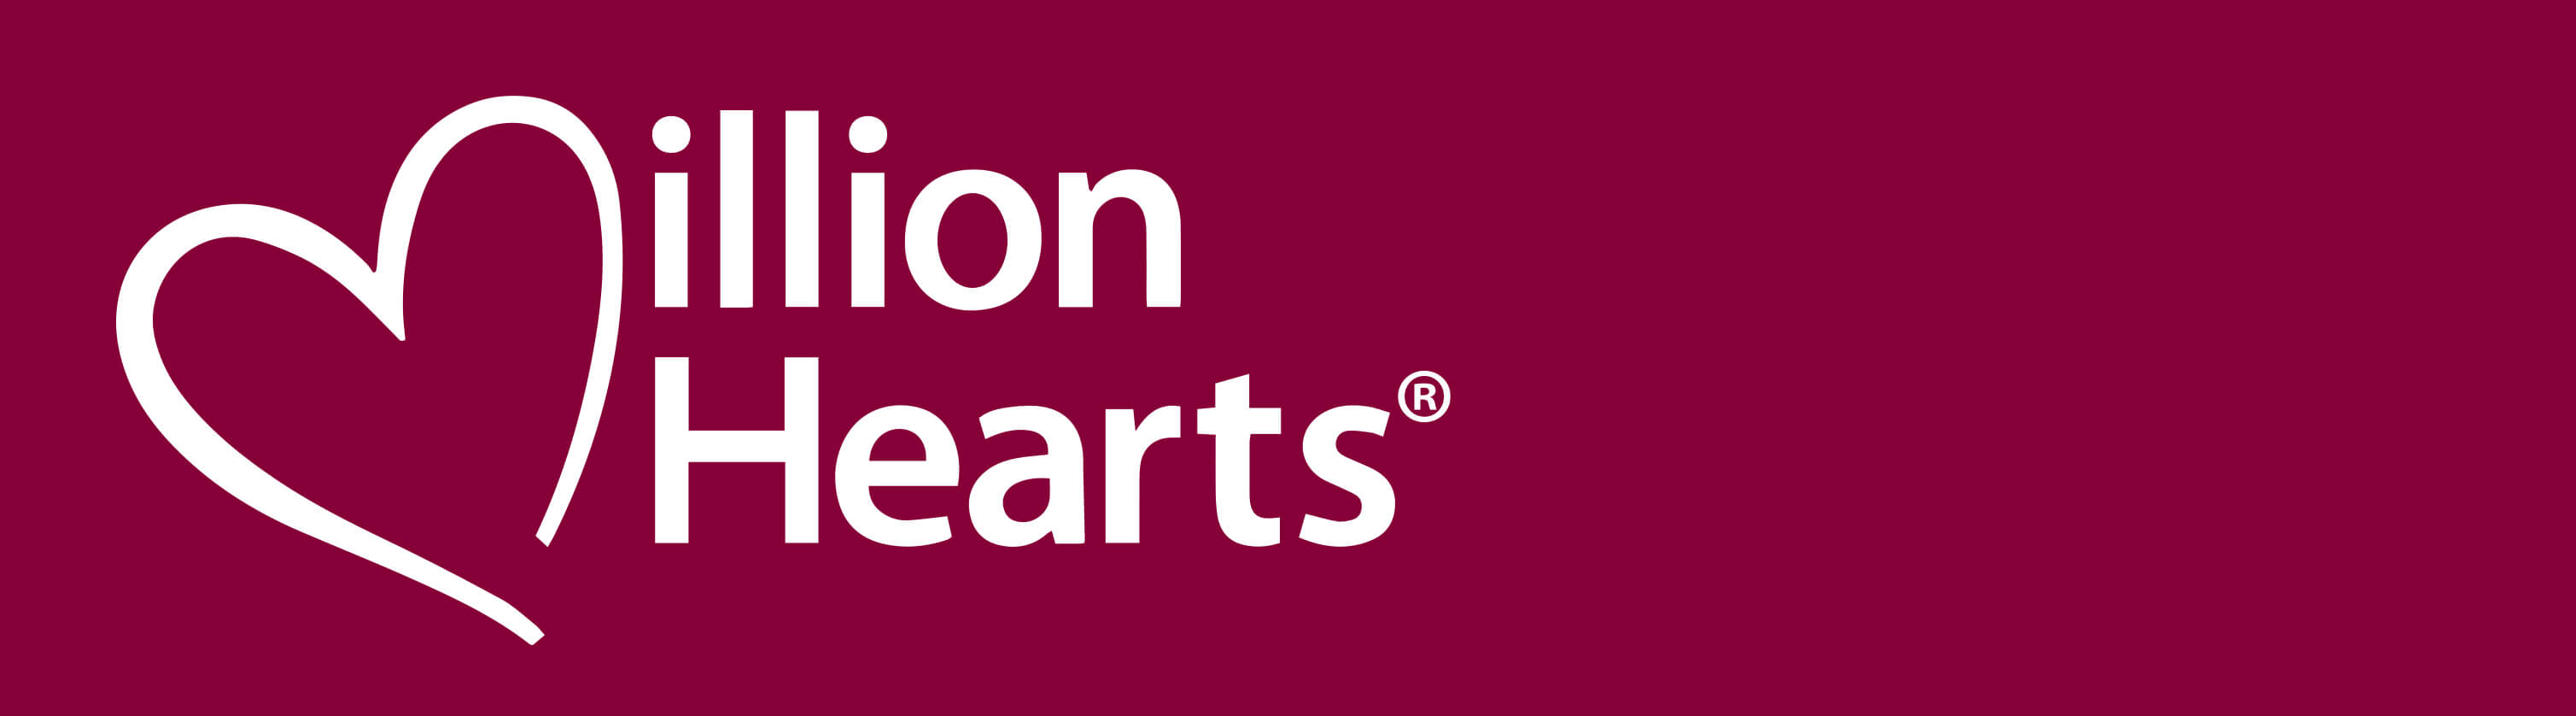 Million Hearts campaign banner